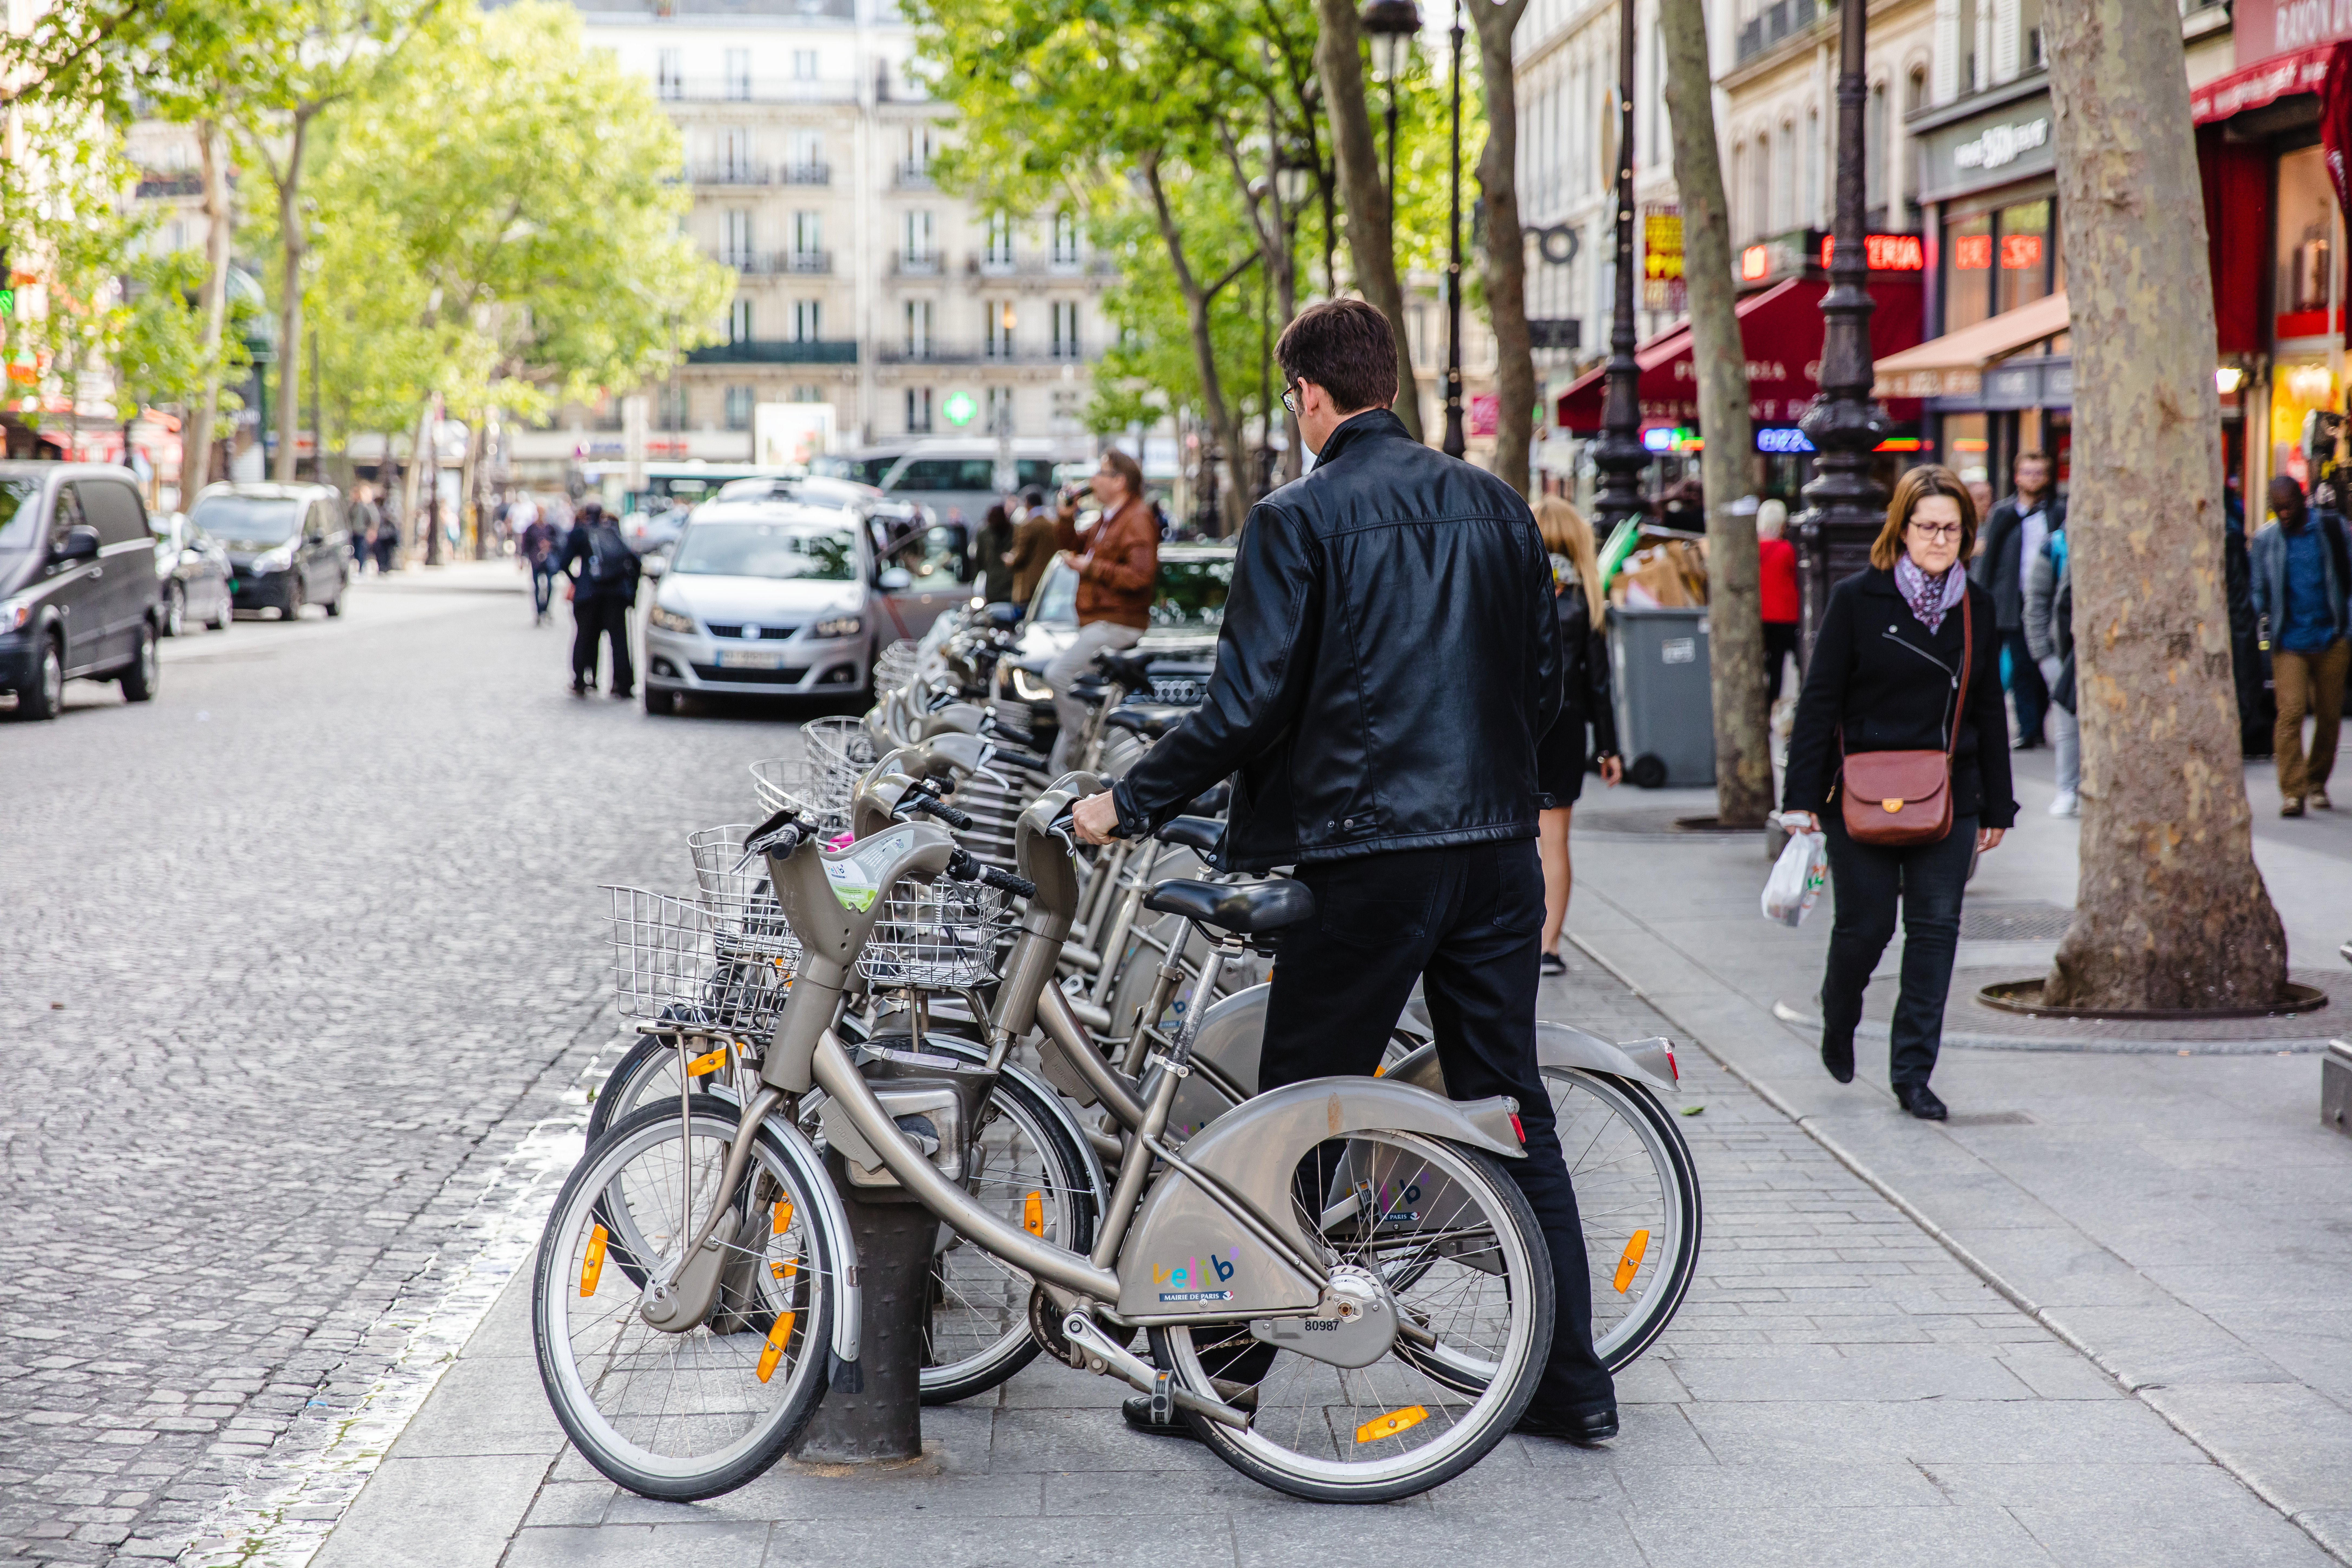 Paris bicycle share program